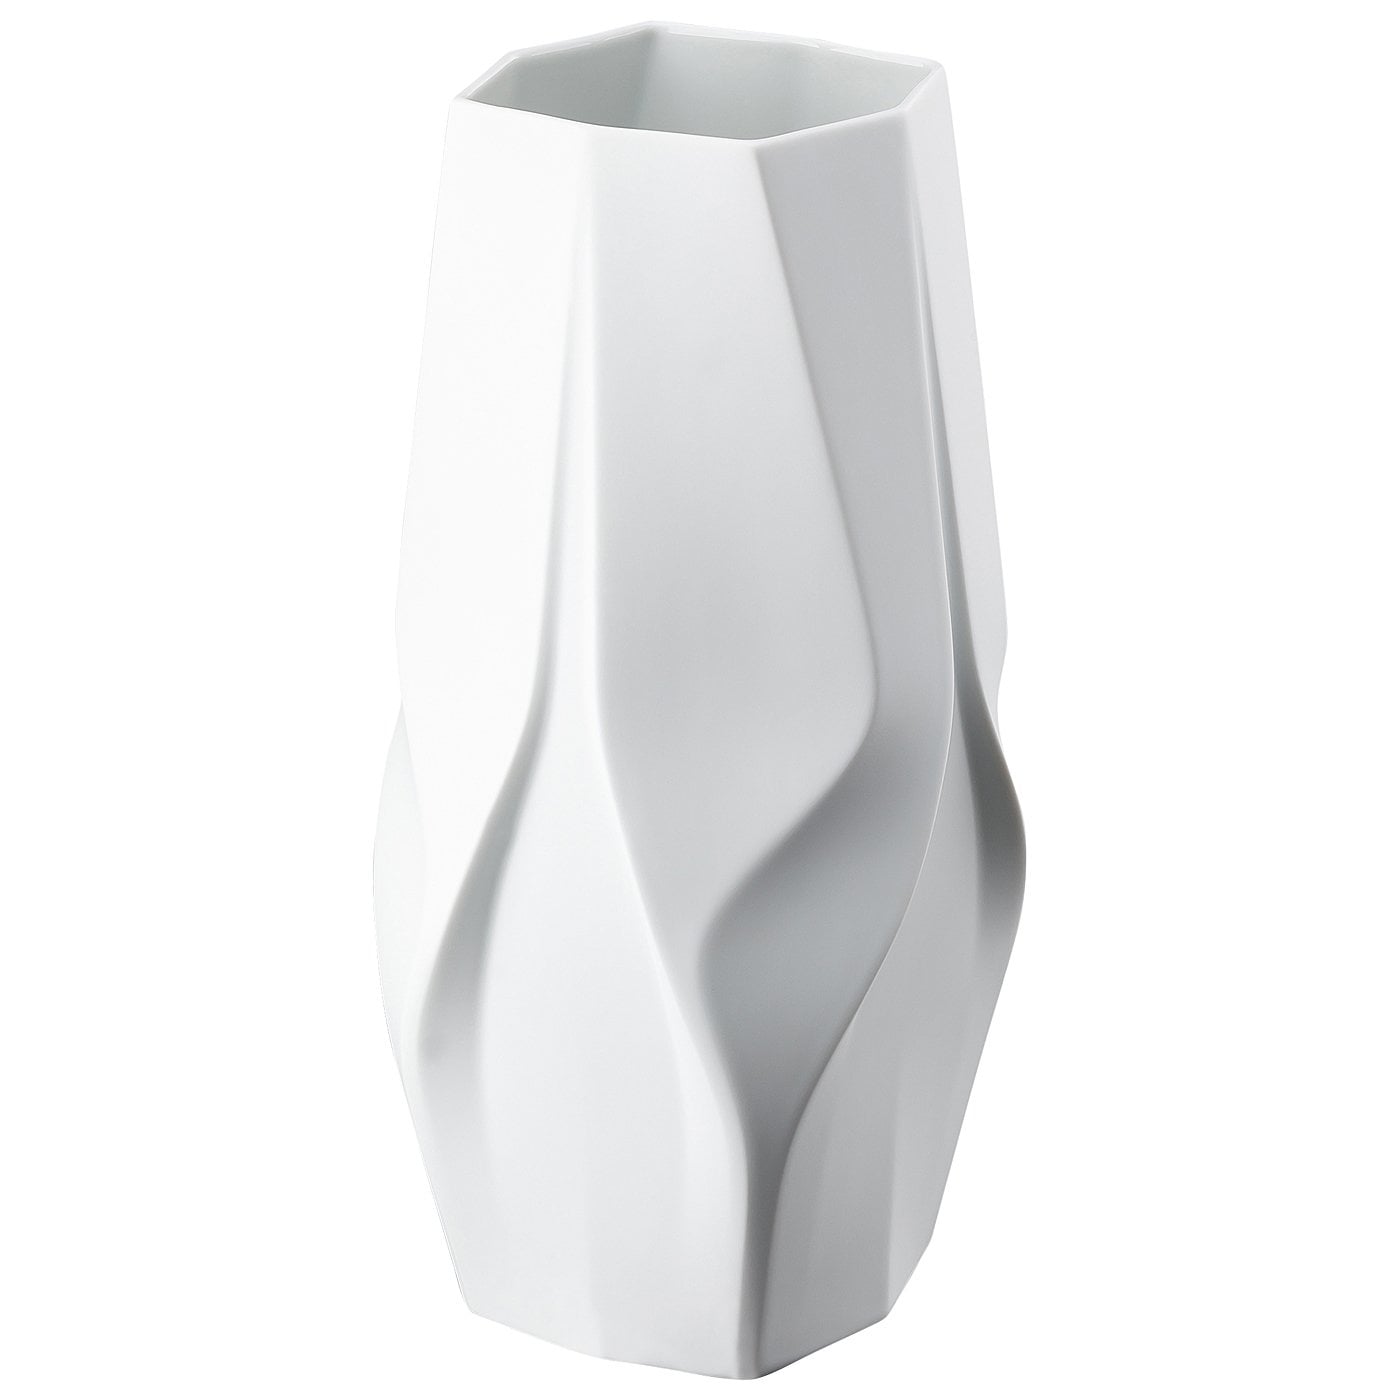 Rosenthal Weave Zaha Hadid vase, 35 cm